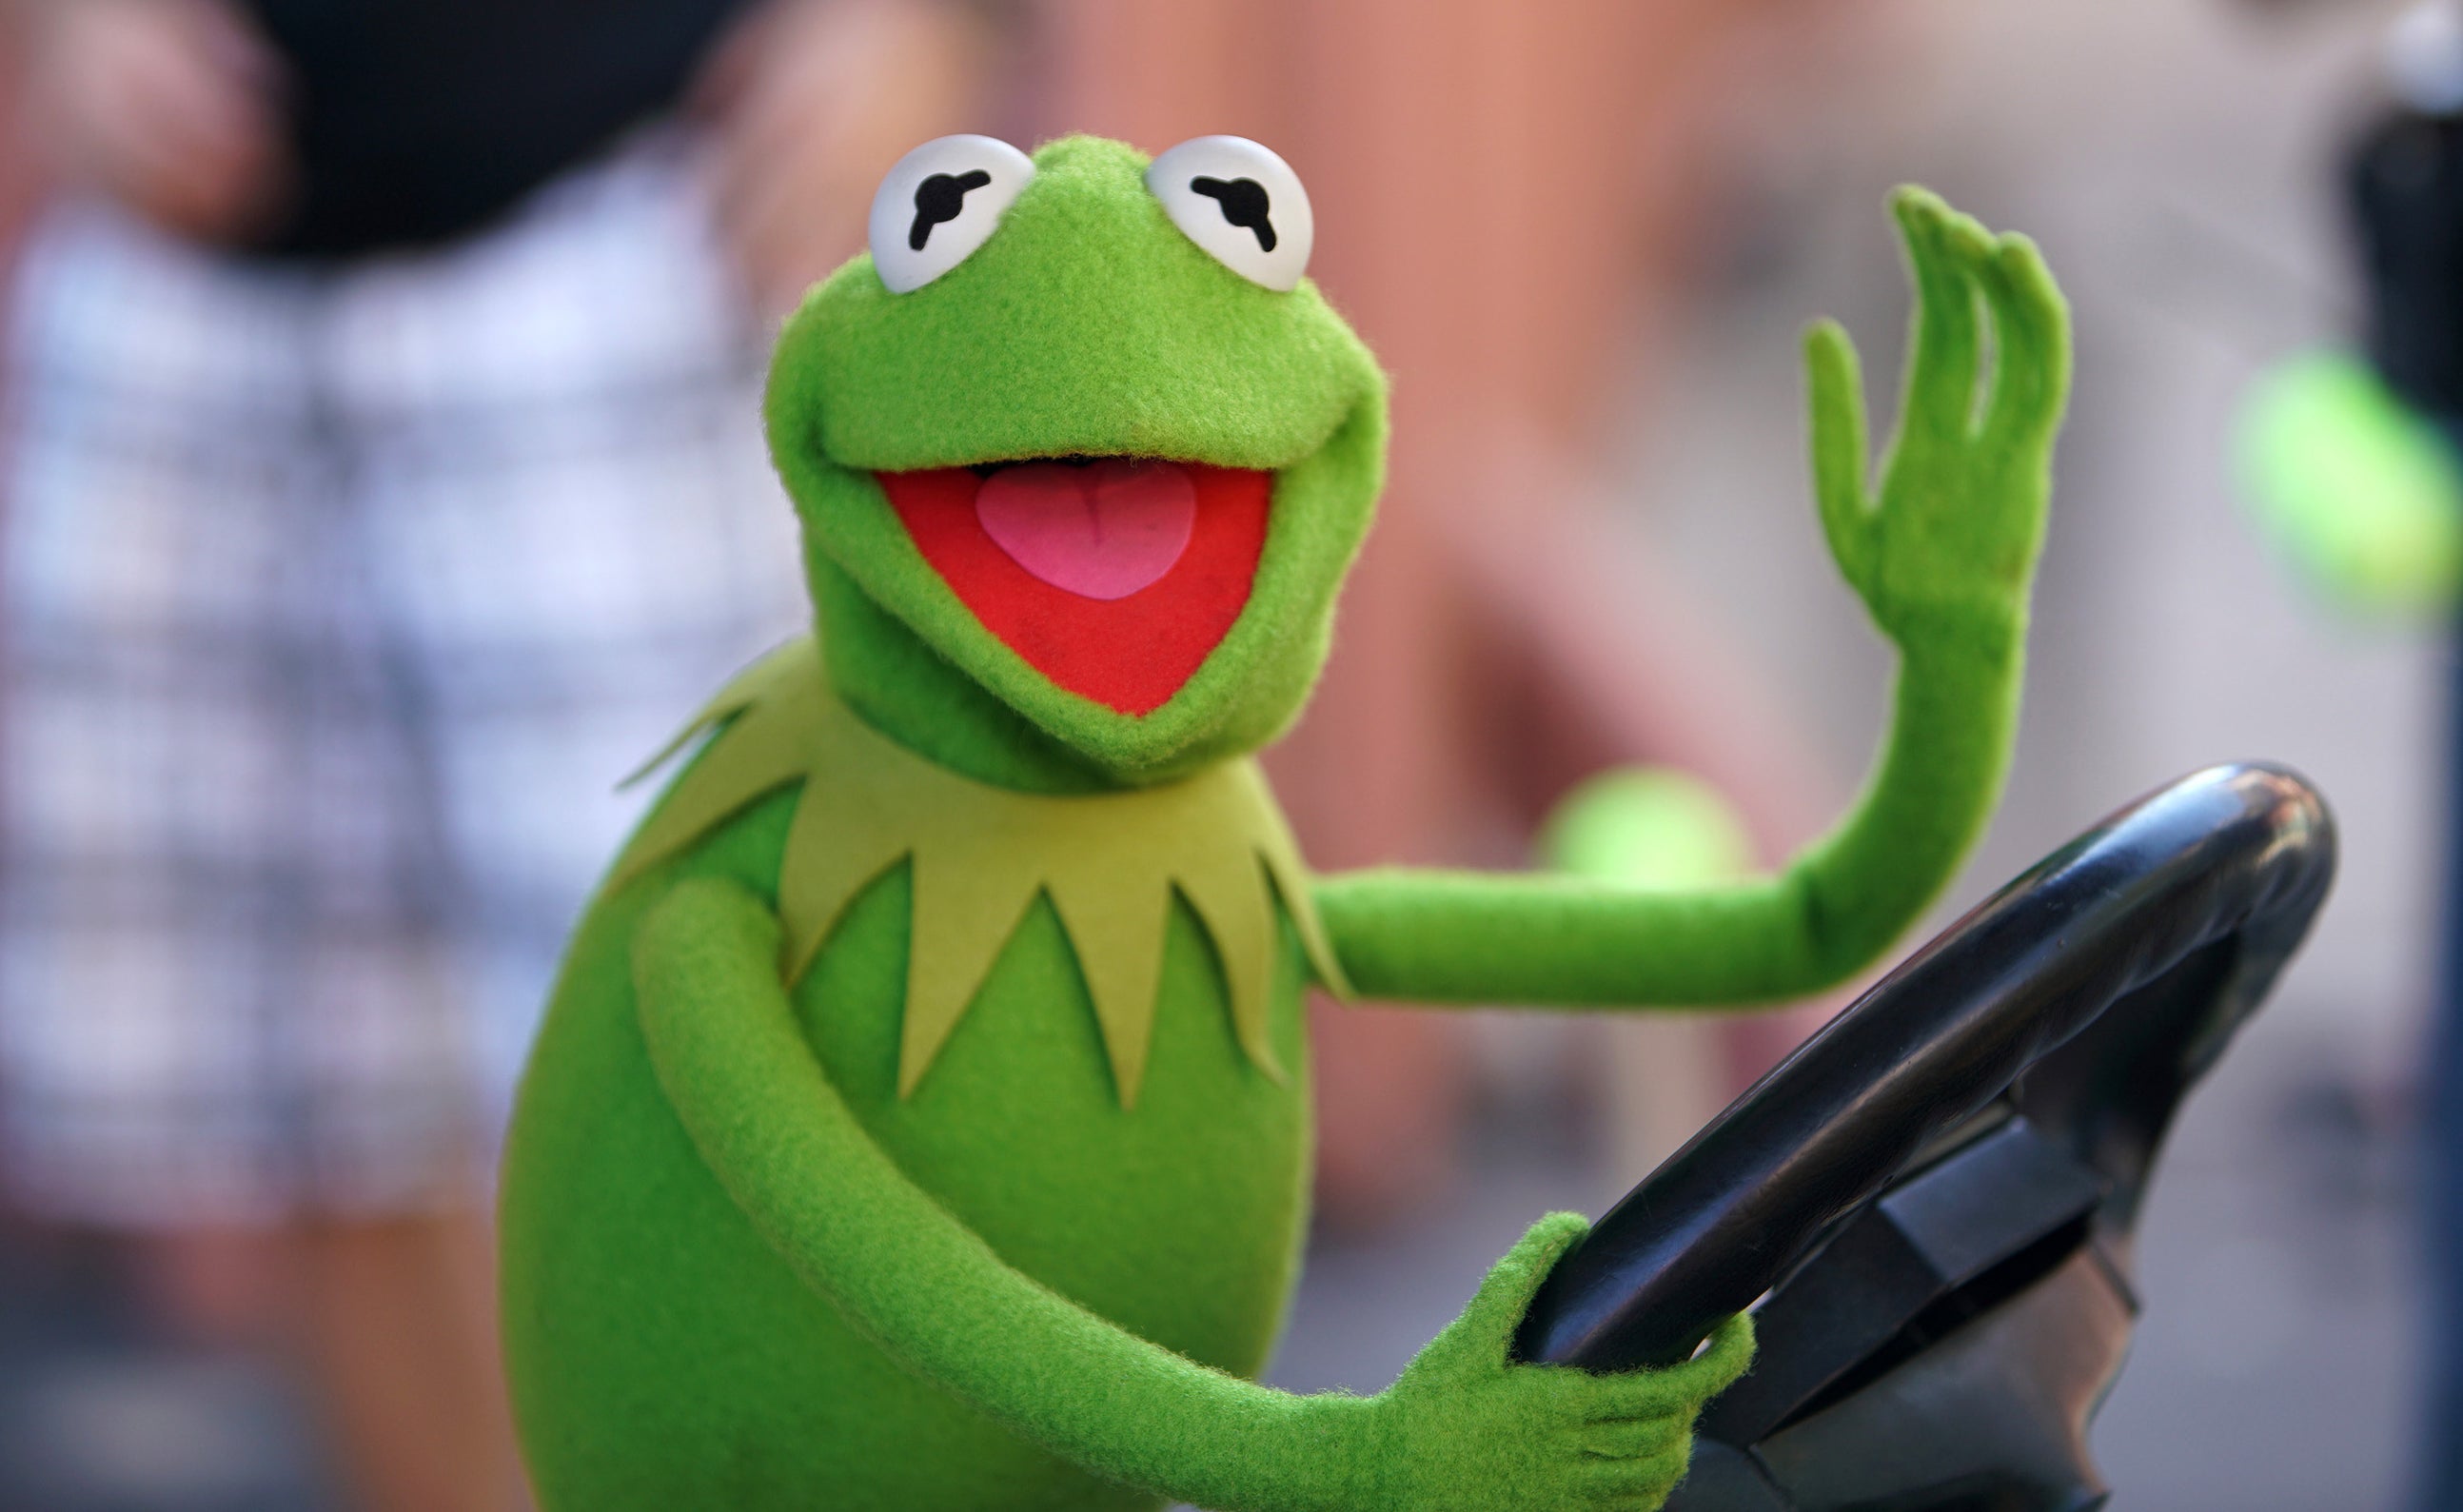 Kermit at the wheel waving and smiling